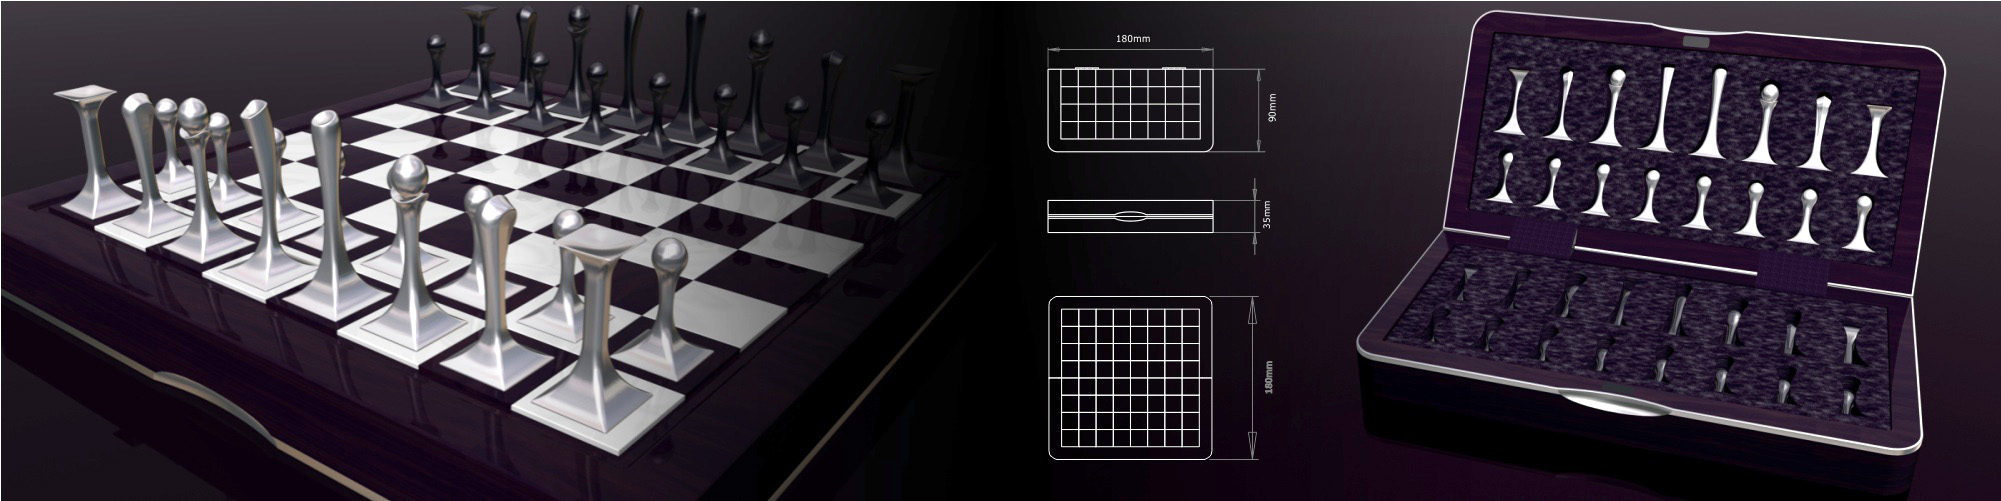 MERFOLK Chess Set